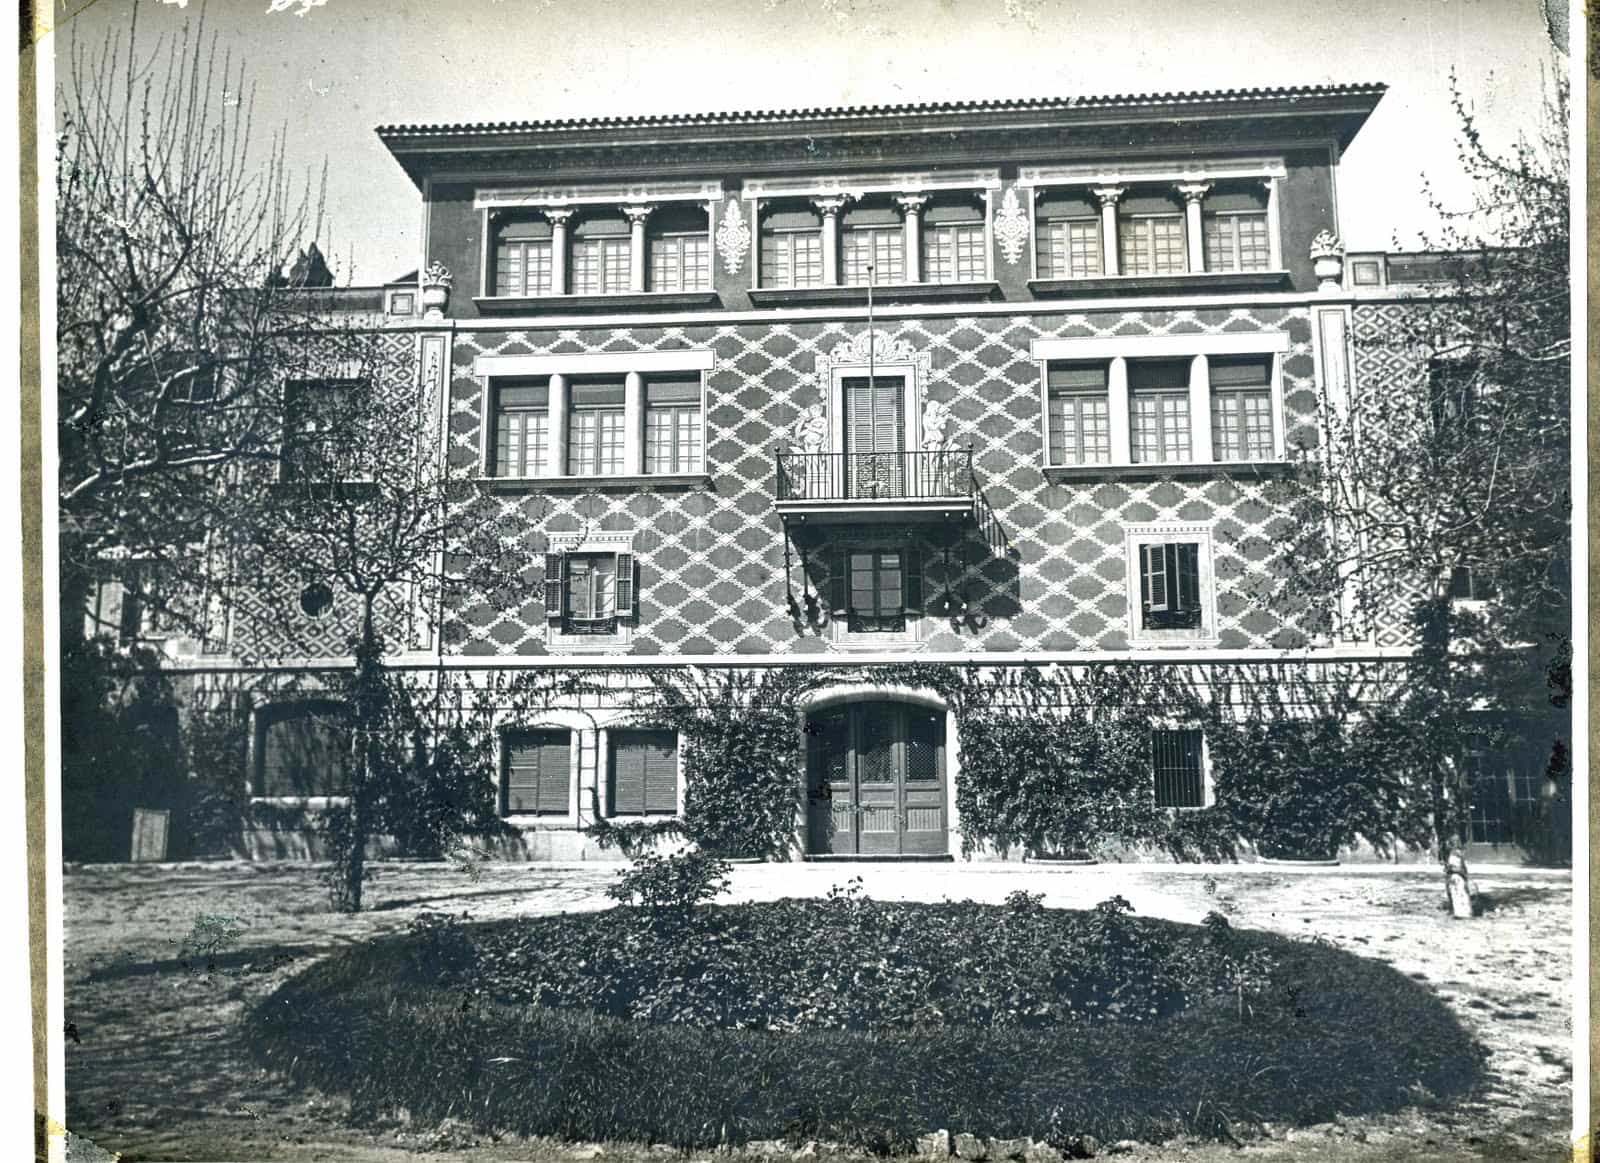 Siglo XVIII - Masie Can MUNTANER, actualmente Colegio Baldiri Reixac (Park Guell)